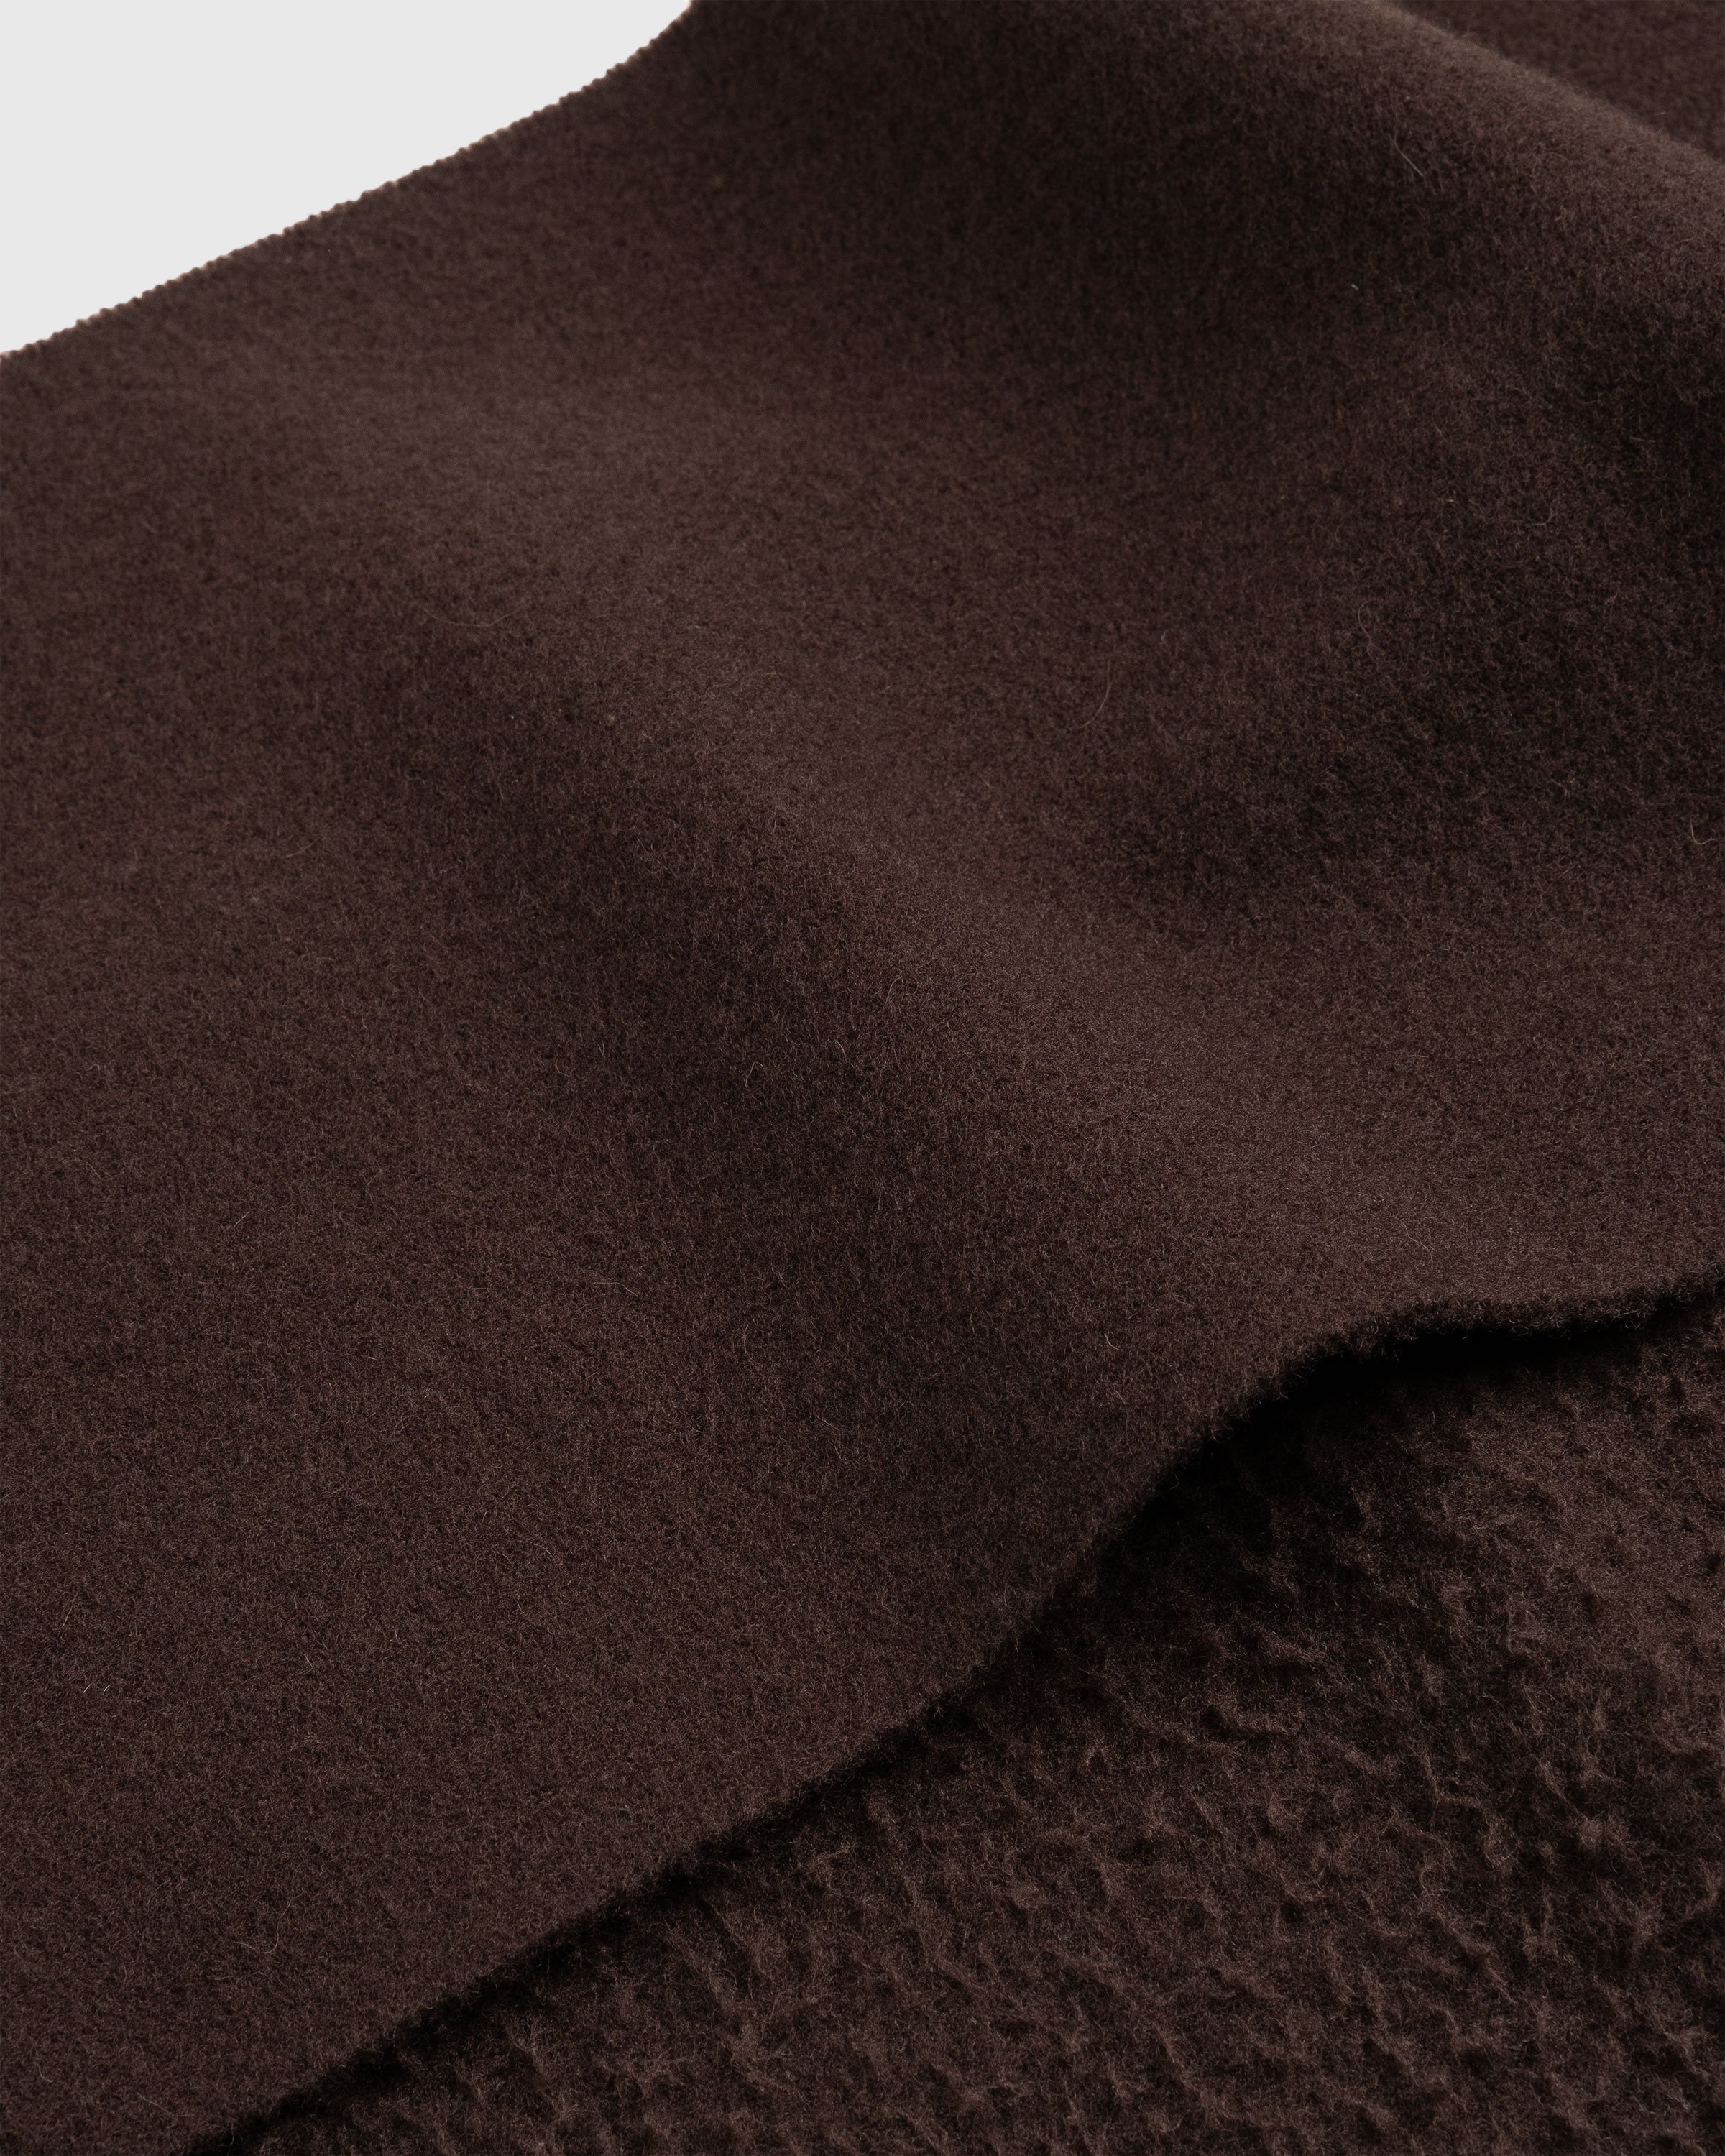 Acne Studios - Wool Fringe Scarf Chocolate Brown - Accessories - Brown - Image 5